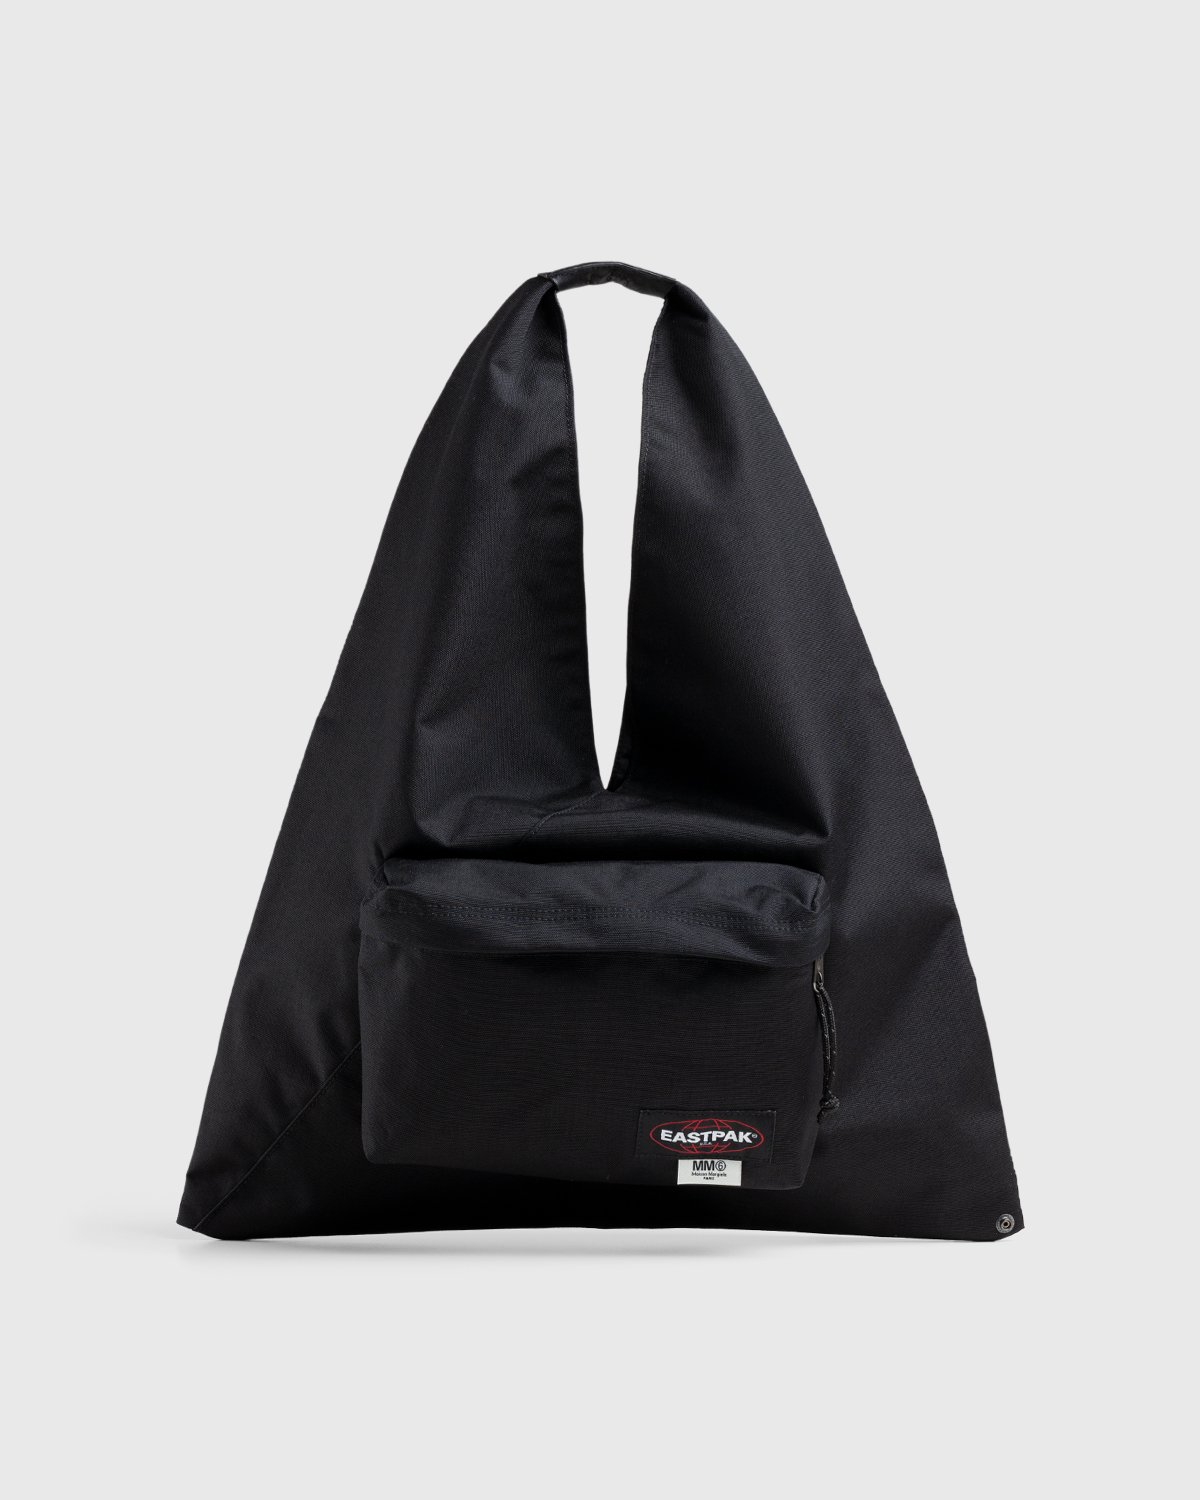 MM6 Maison Margiela x Eastpak - Borsa Shopping Bag Black - Accessories - Black - Image 1